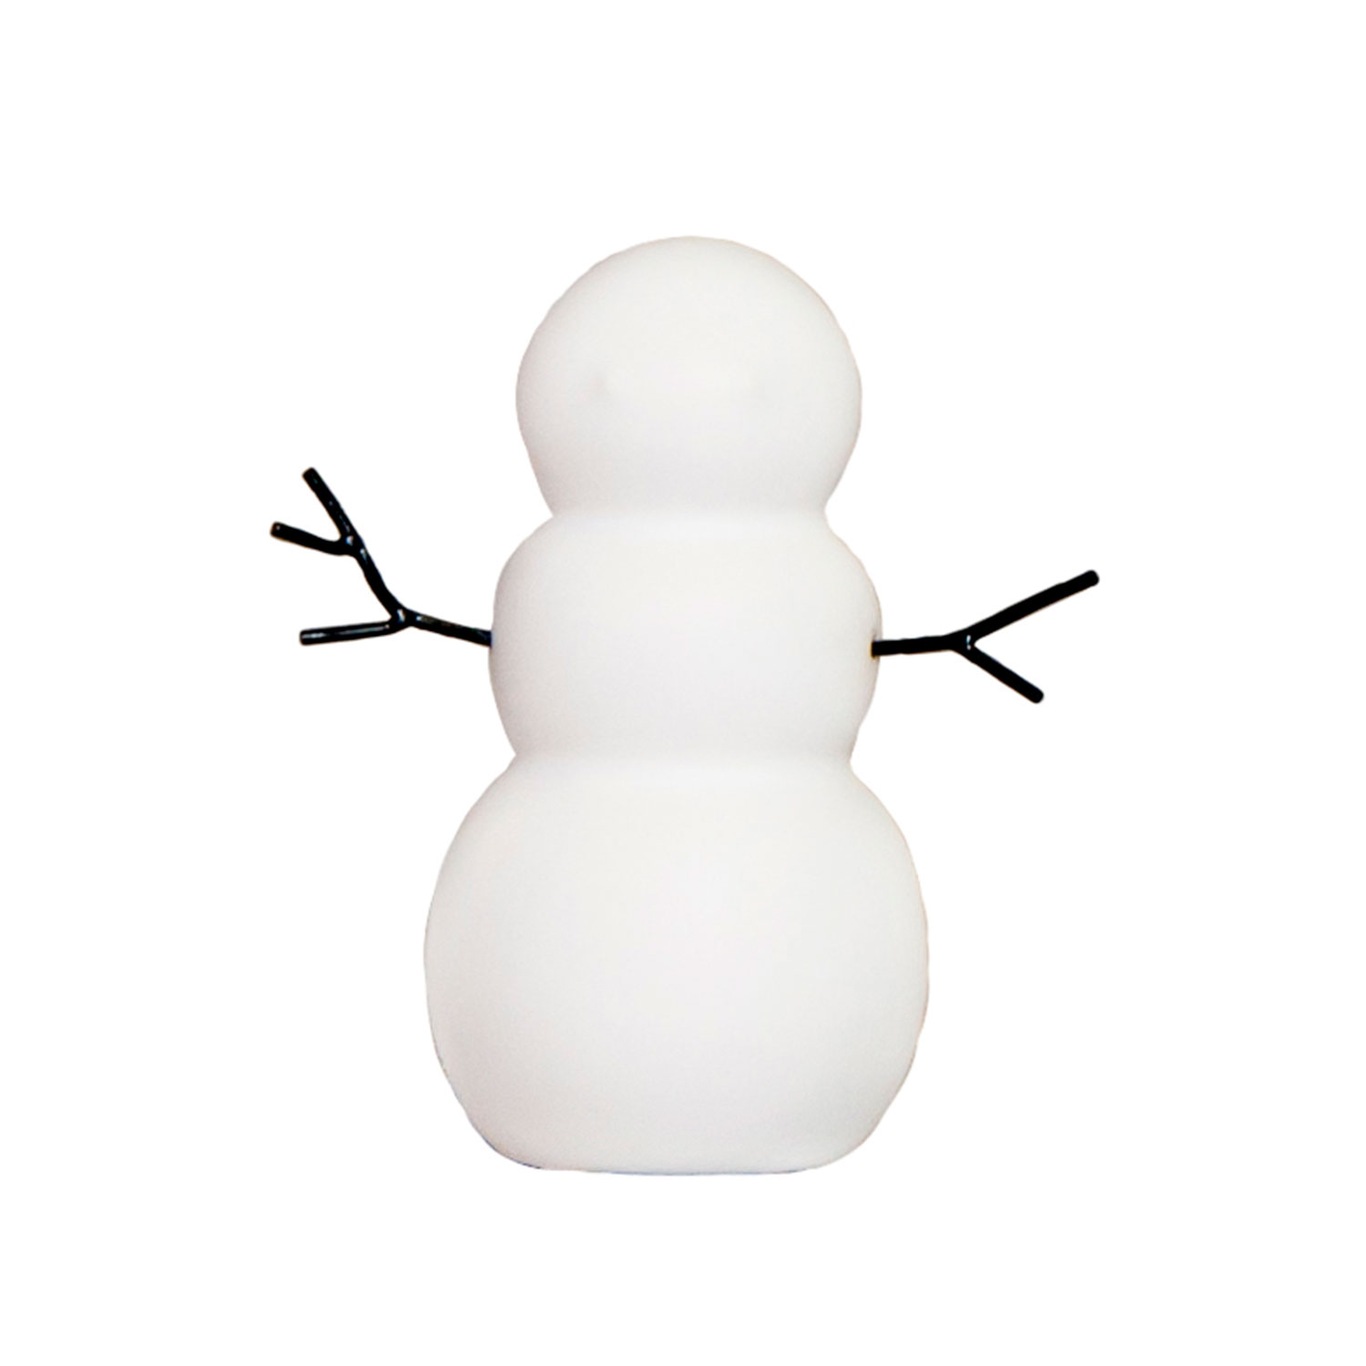 Snowman Small, White